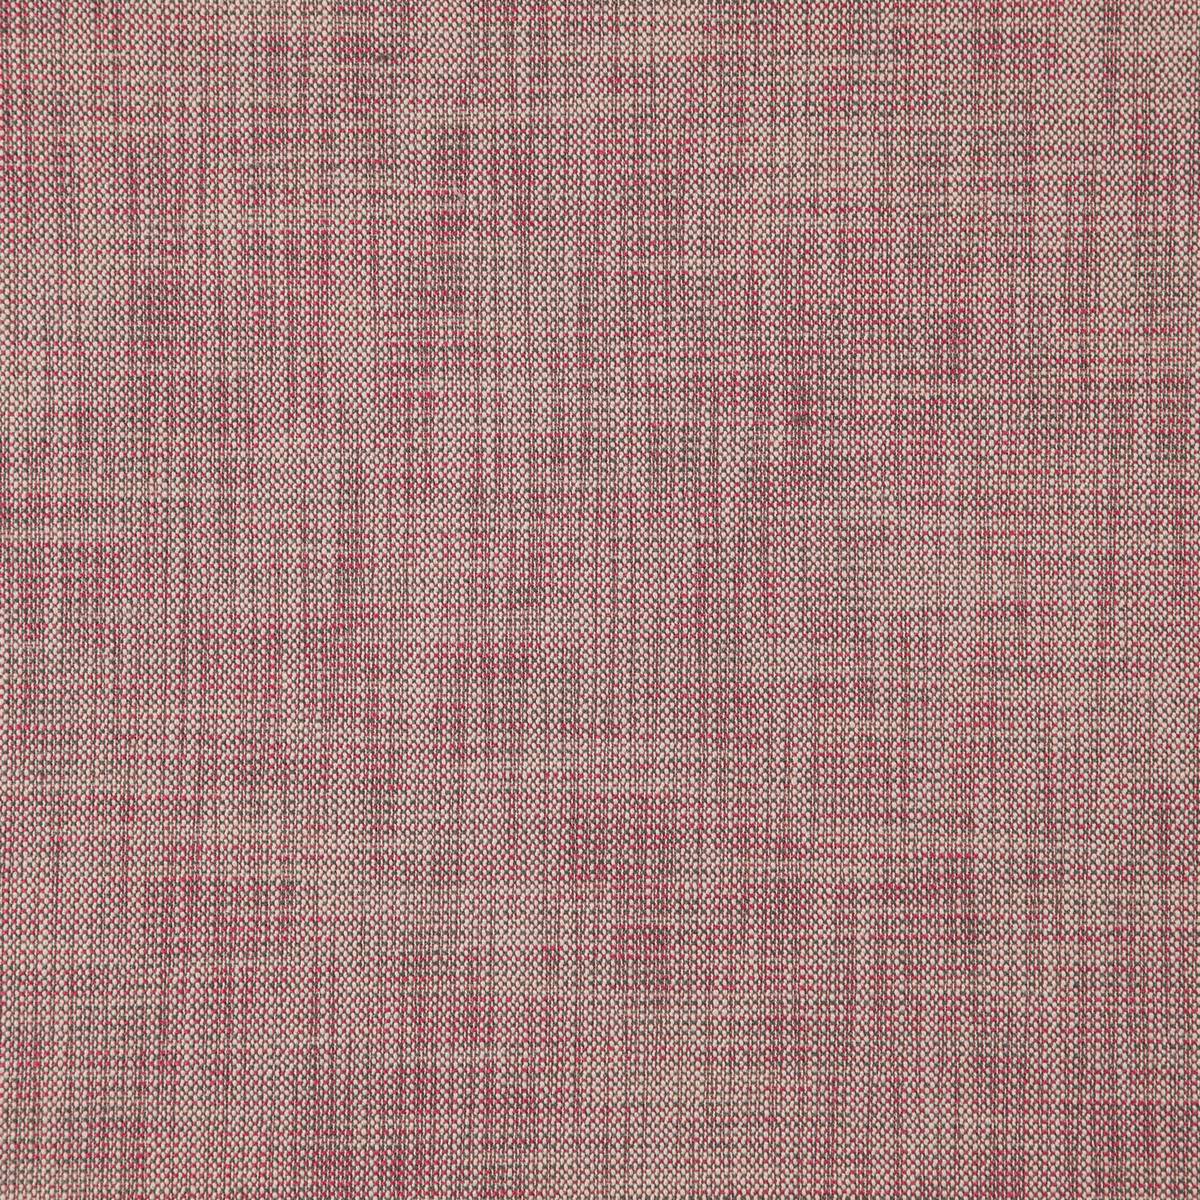 Levens Blush Fabric by Sanderson